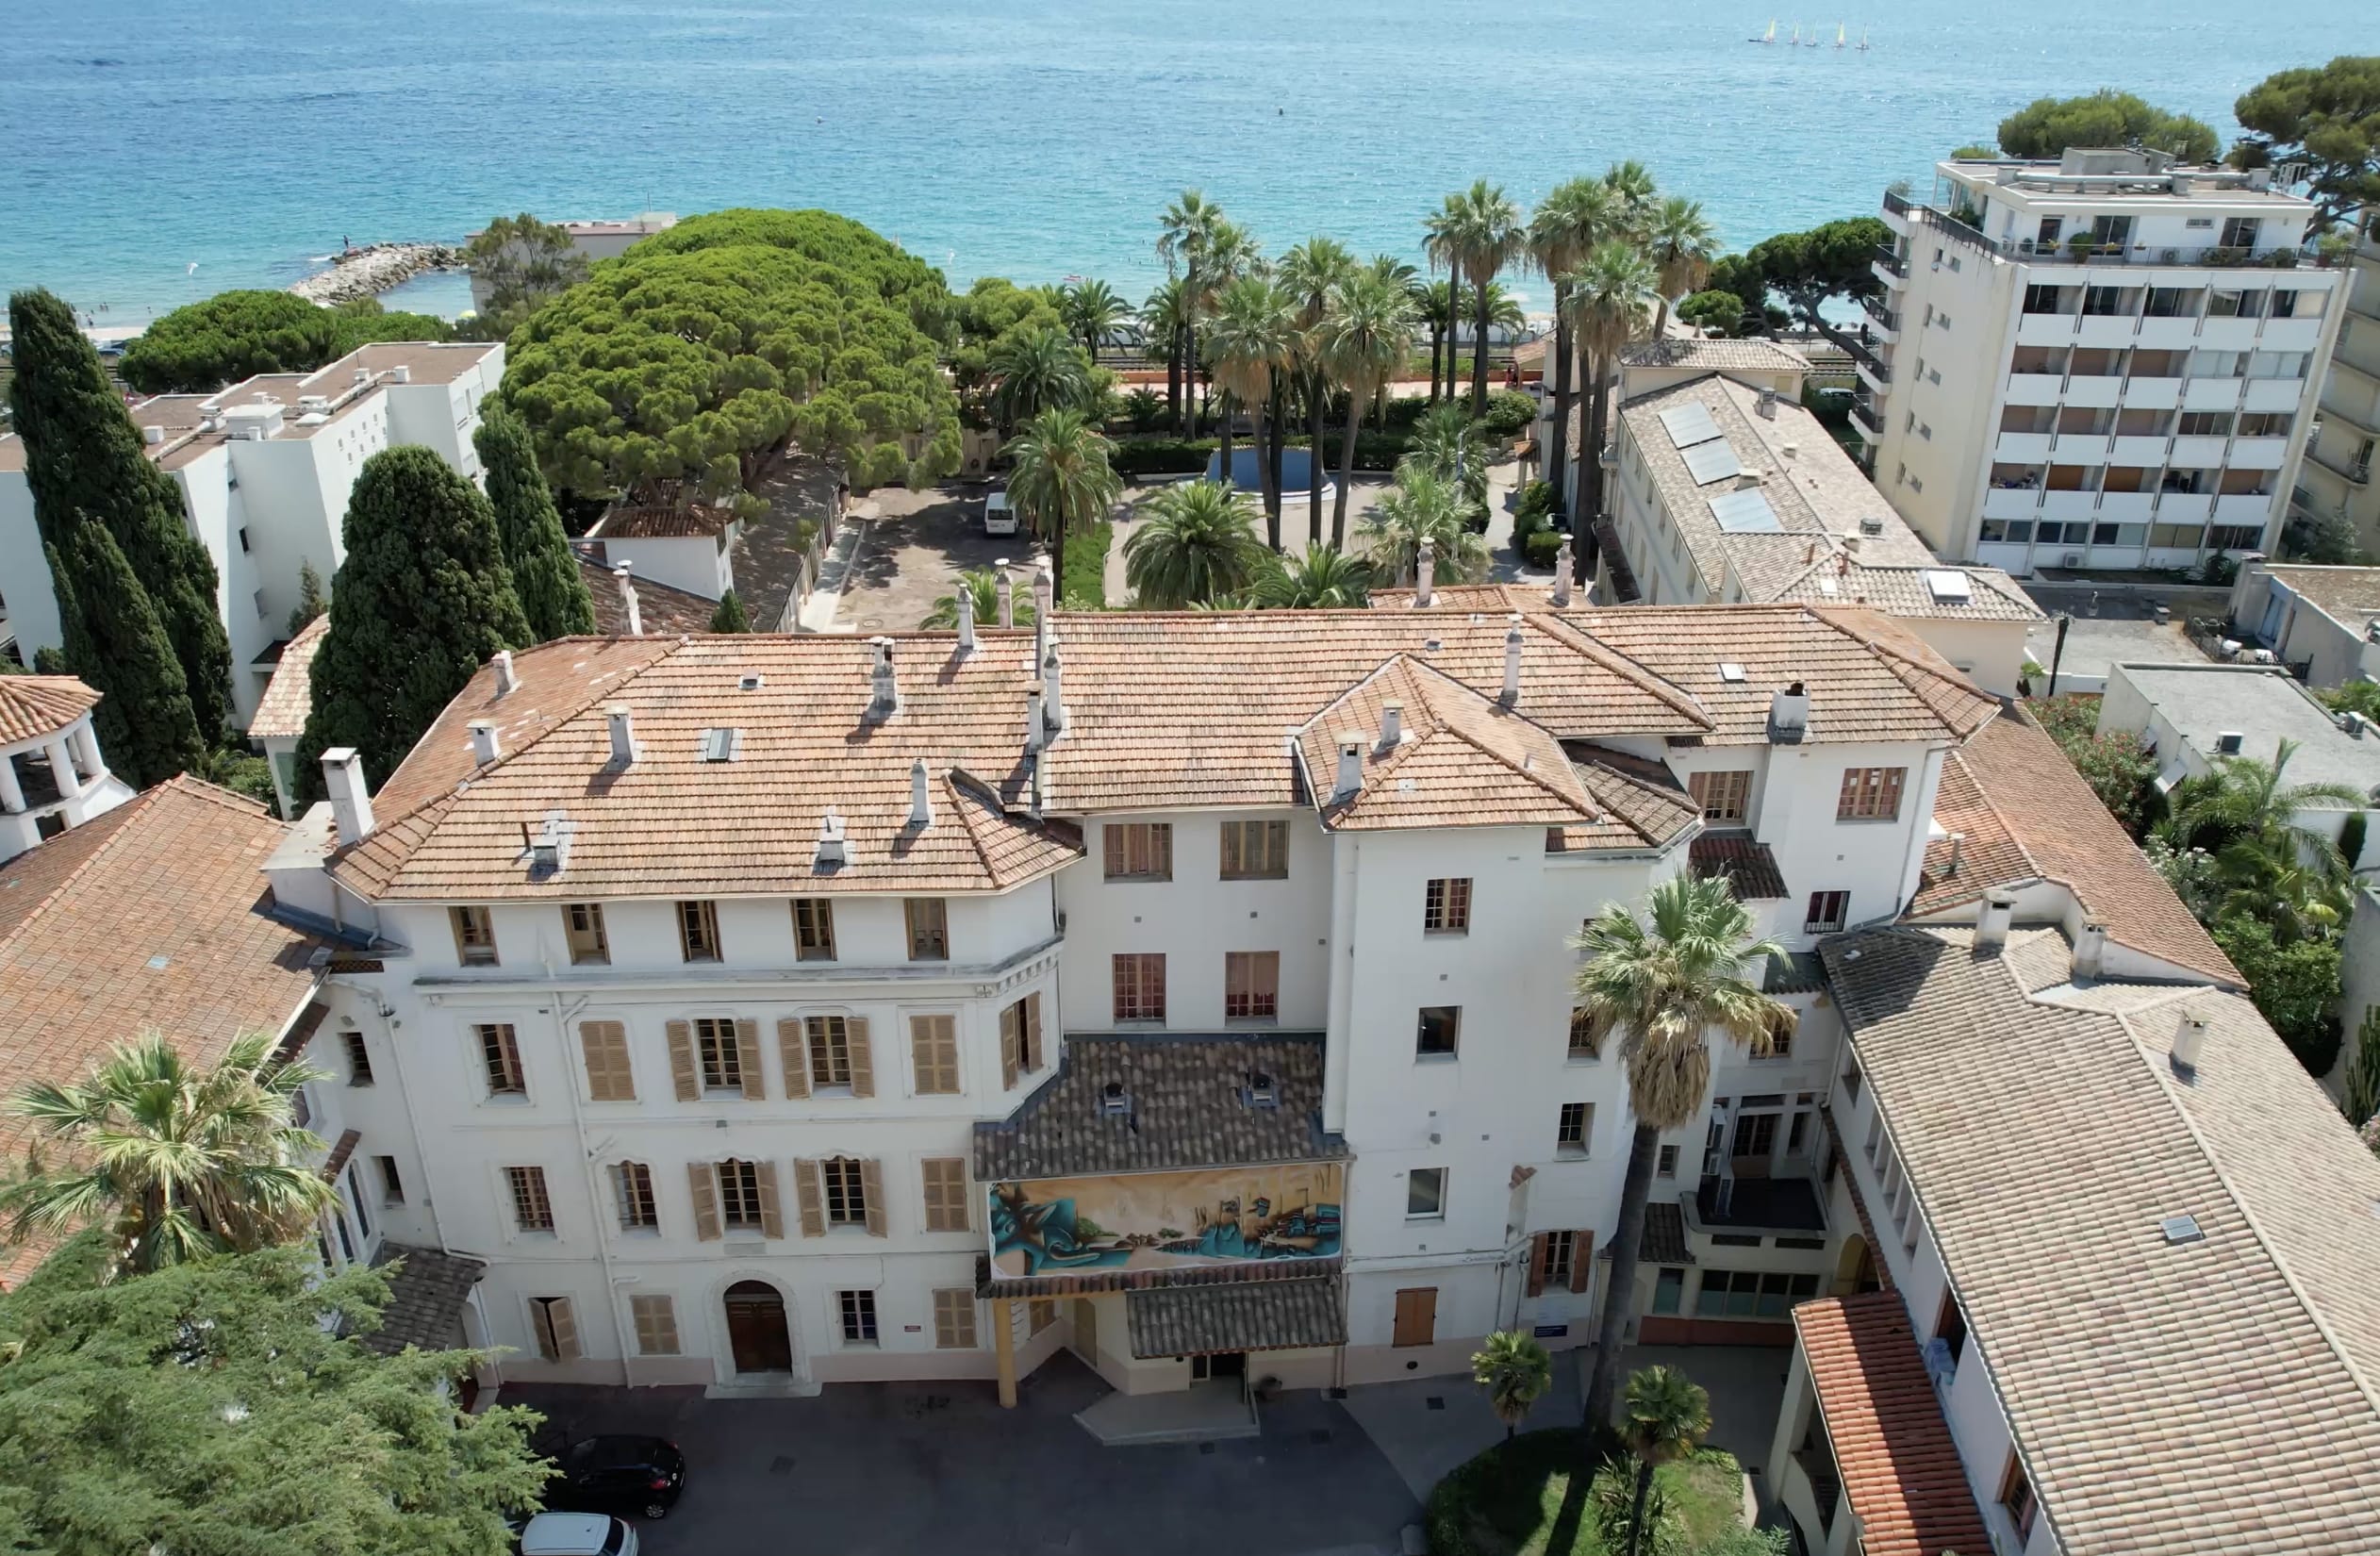 Hostel Santa Maria - Cannes